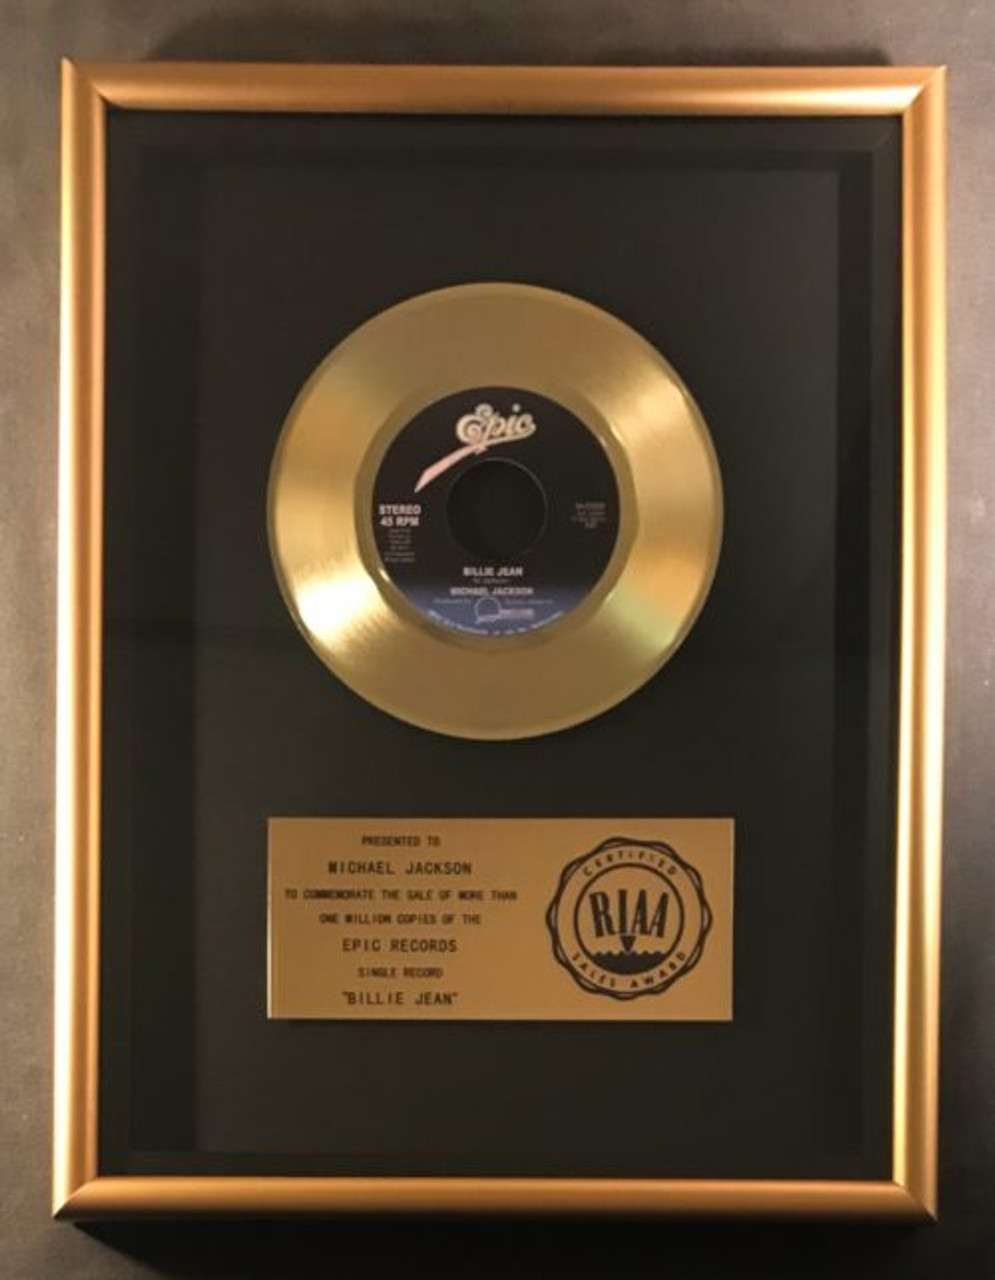 Michael Jackson Billie Jean 45 Gold RIAA Record Award Epic Records 